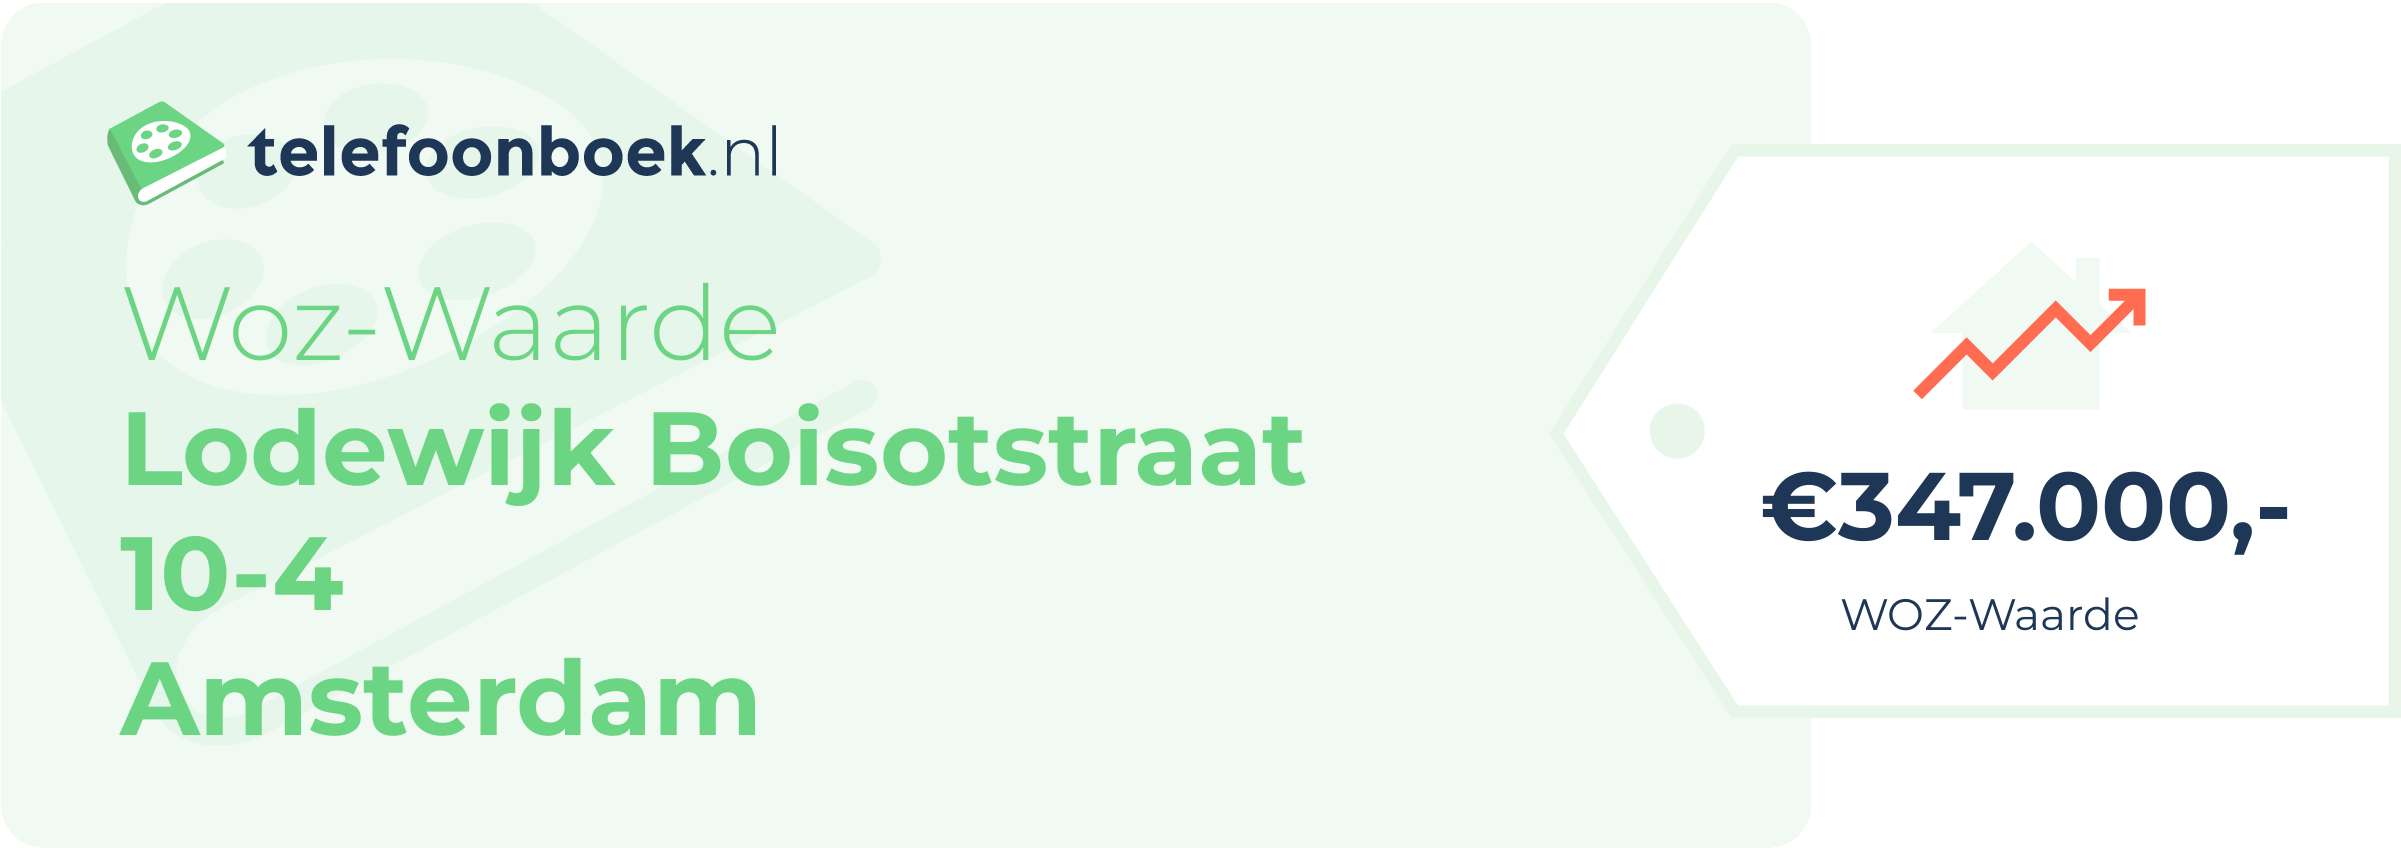 WOZ-waarde Lodewijk Boisotstraat 10-4 Amsterdam